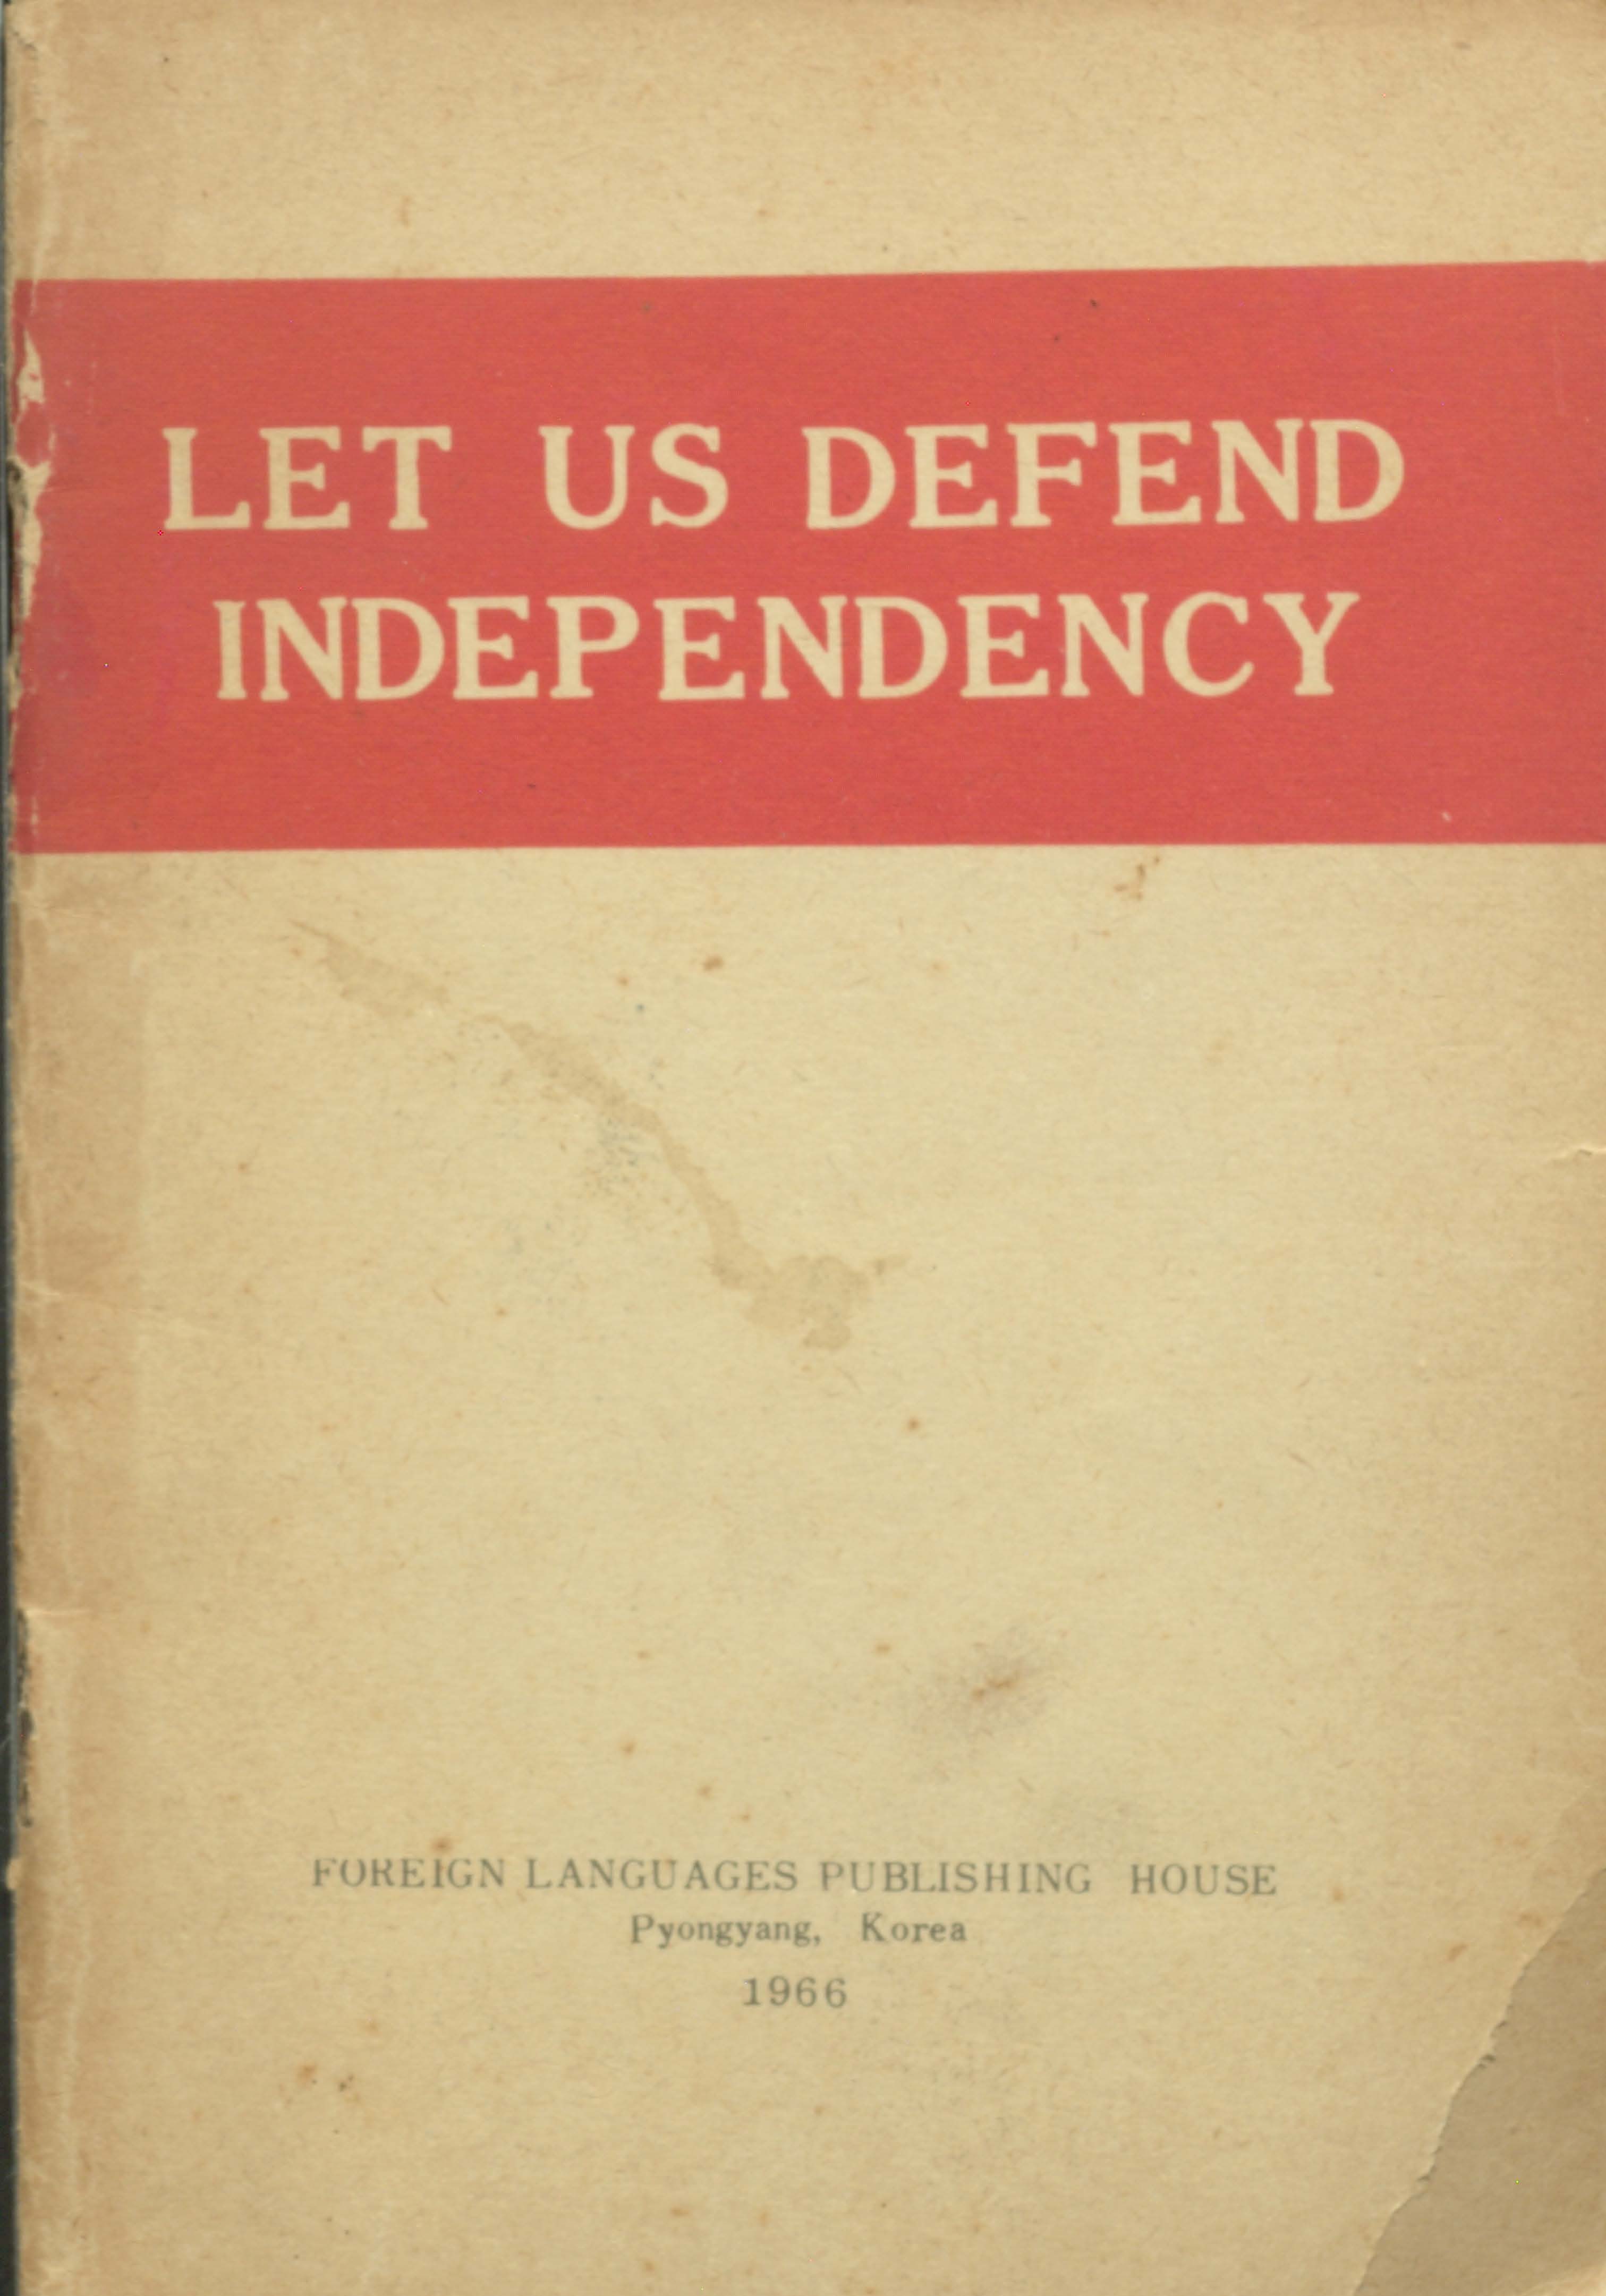 Let us defend independency